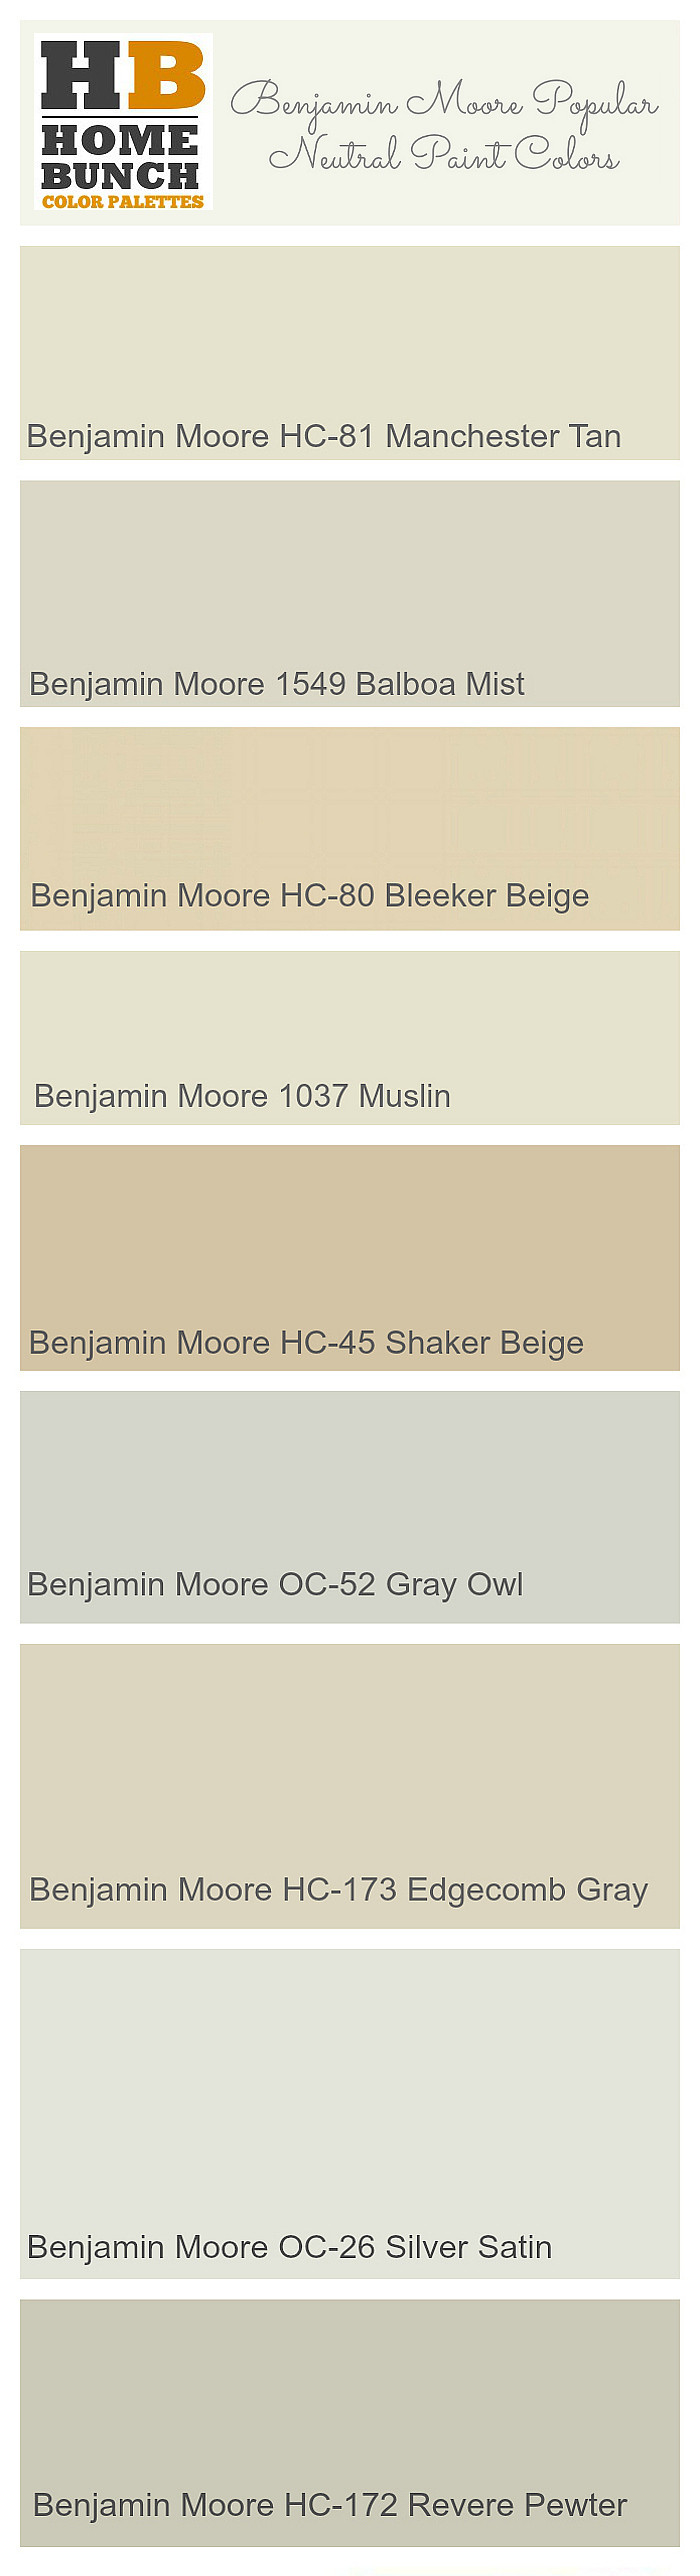 Best ideas about Benjamin Moore Paint Colors
. Save or Pin Benjamin Moore Shaker Beige Paint Color Now.